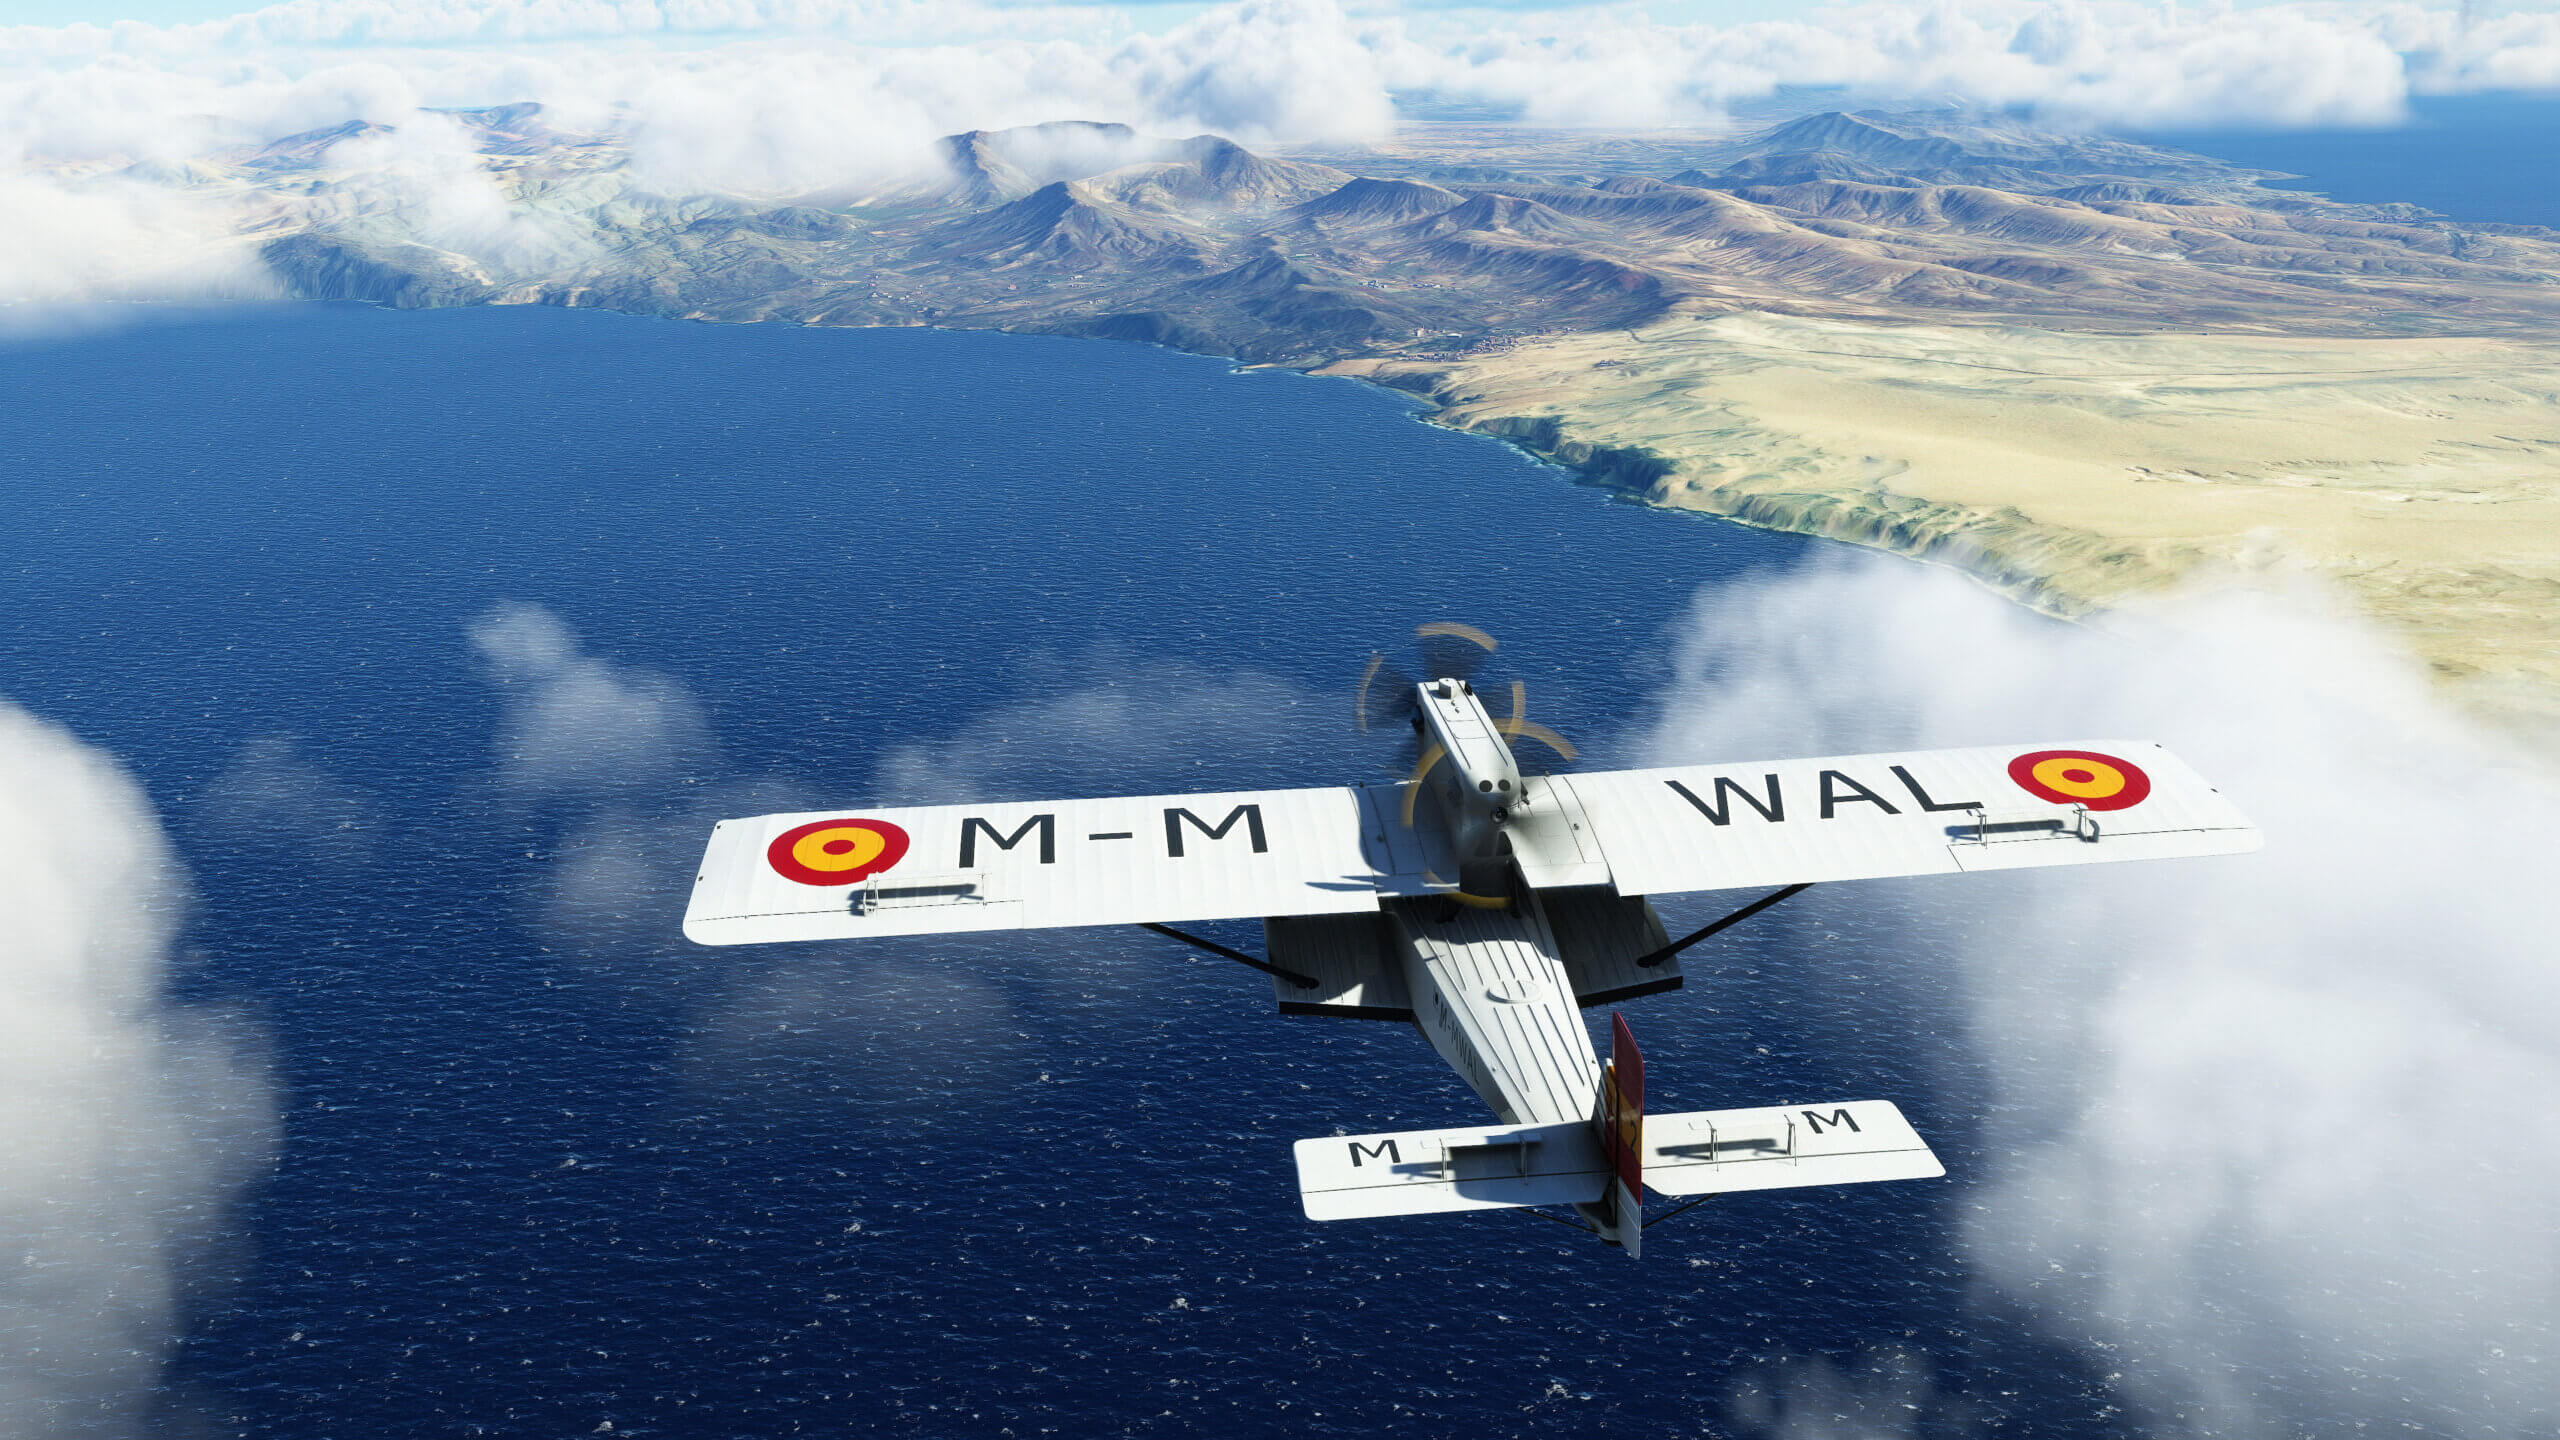 Dornier Do X wallpaper, Dornier aircraft, Aviation enthusiast, Ethan Anderson, 2560x1440 HD Desktop